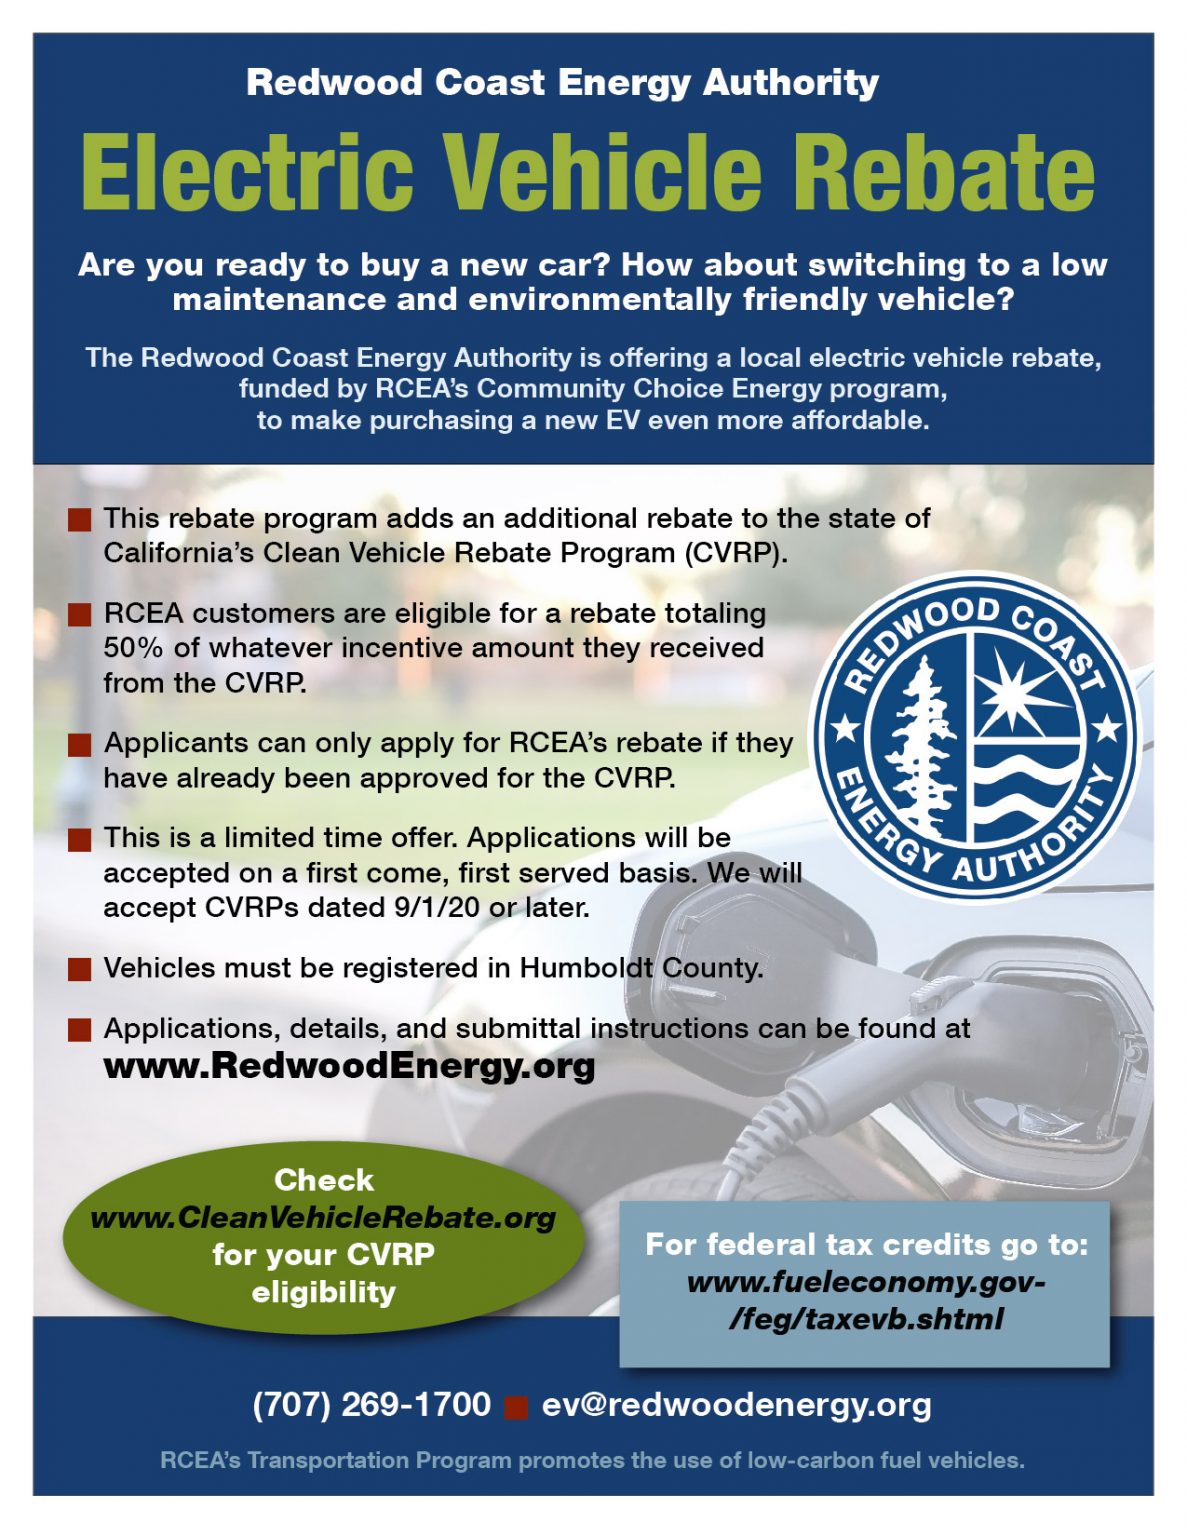 electric-vehicle-rebate-redwood-coast-energy-authority